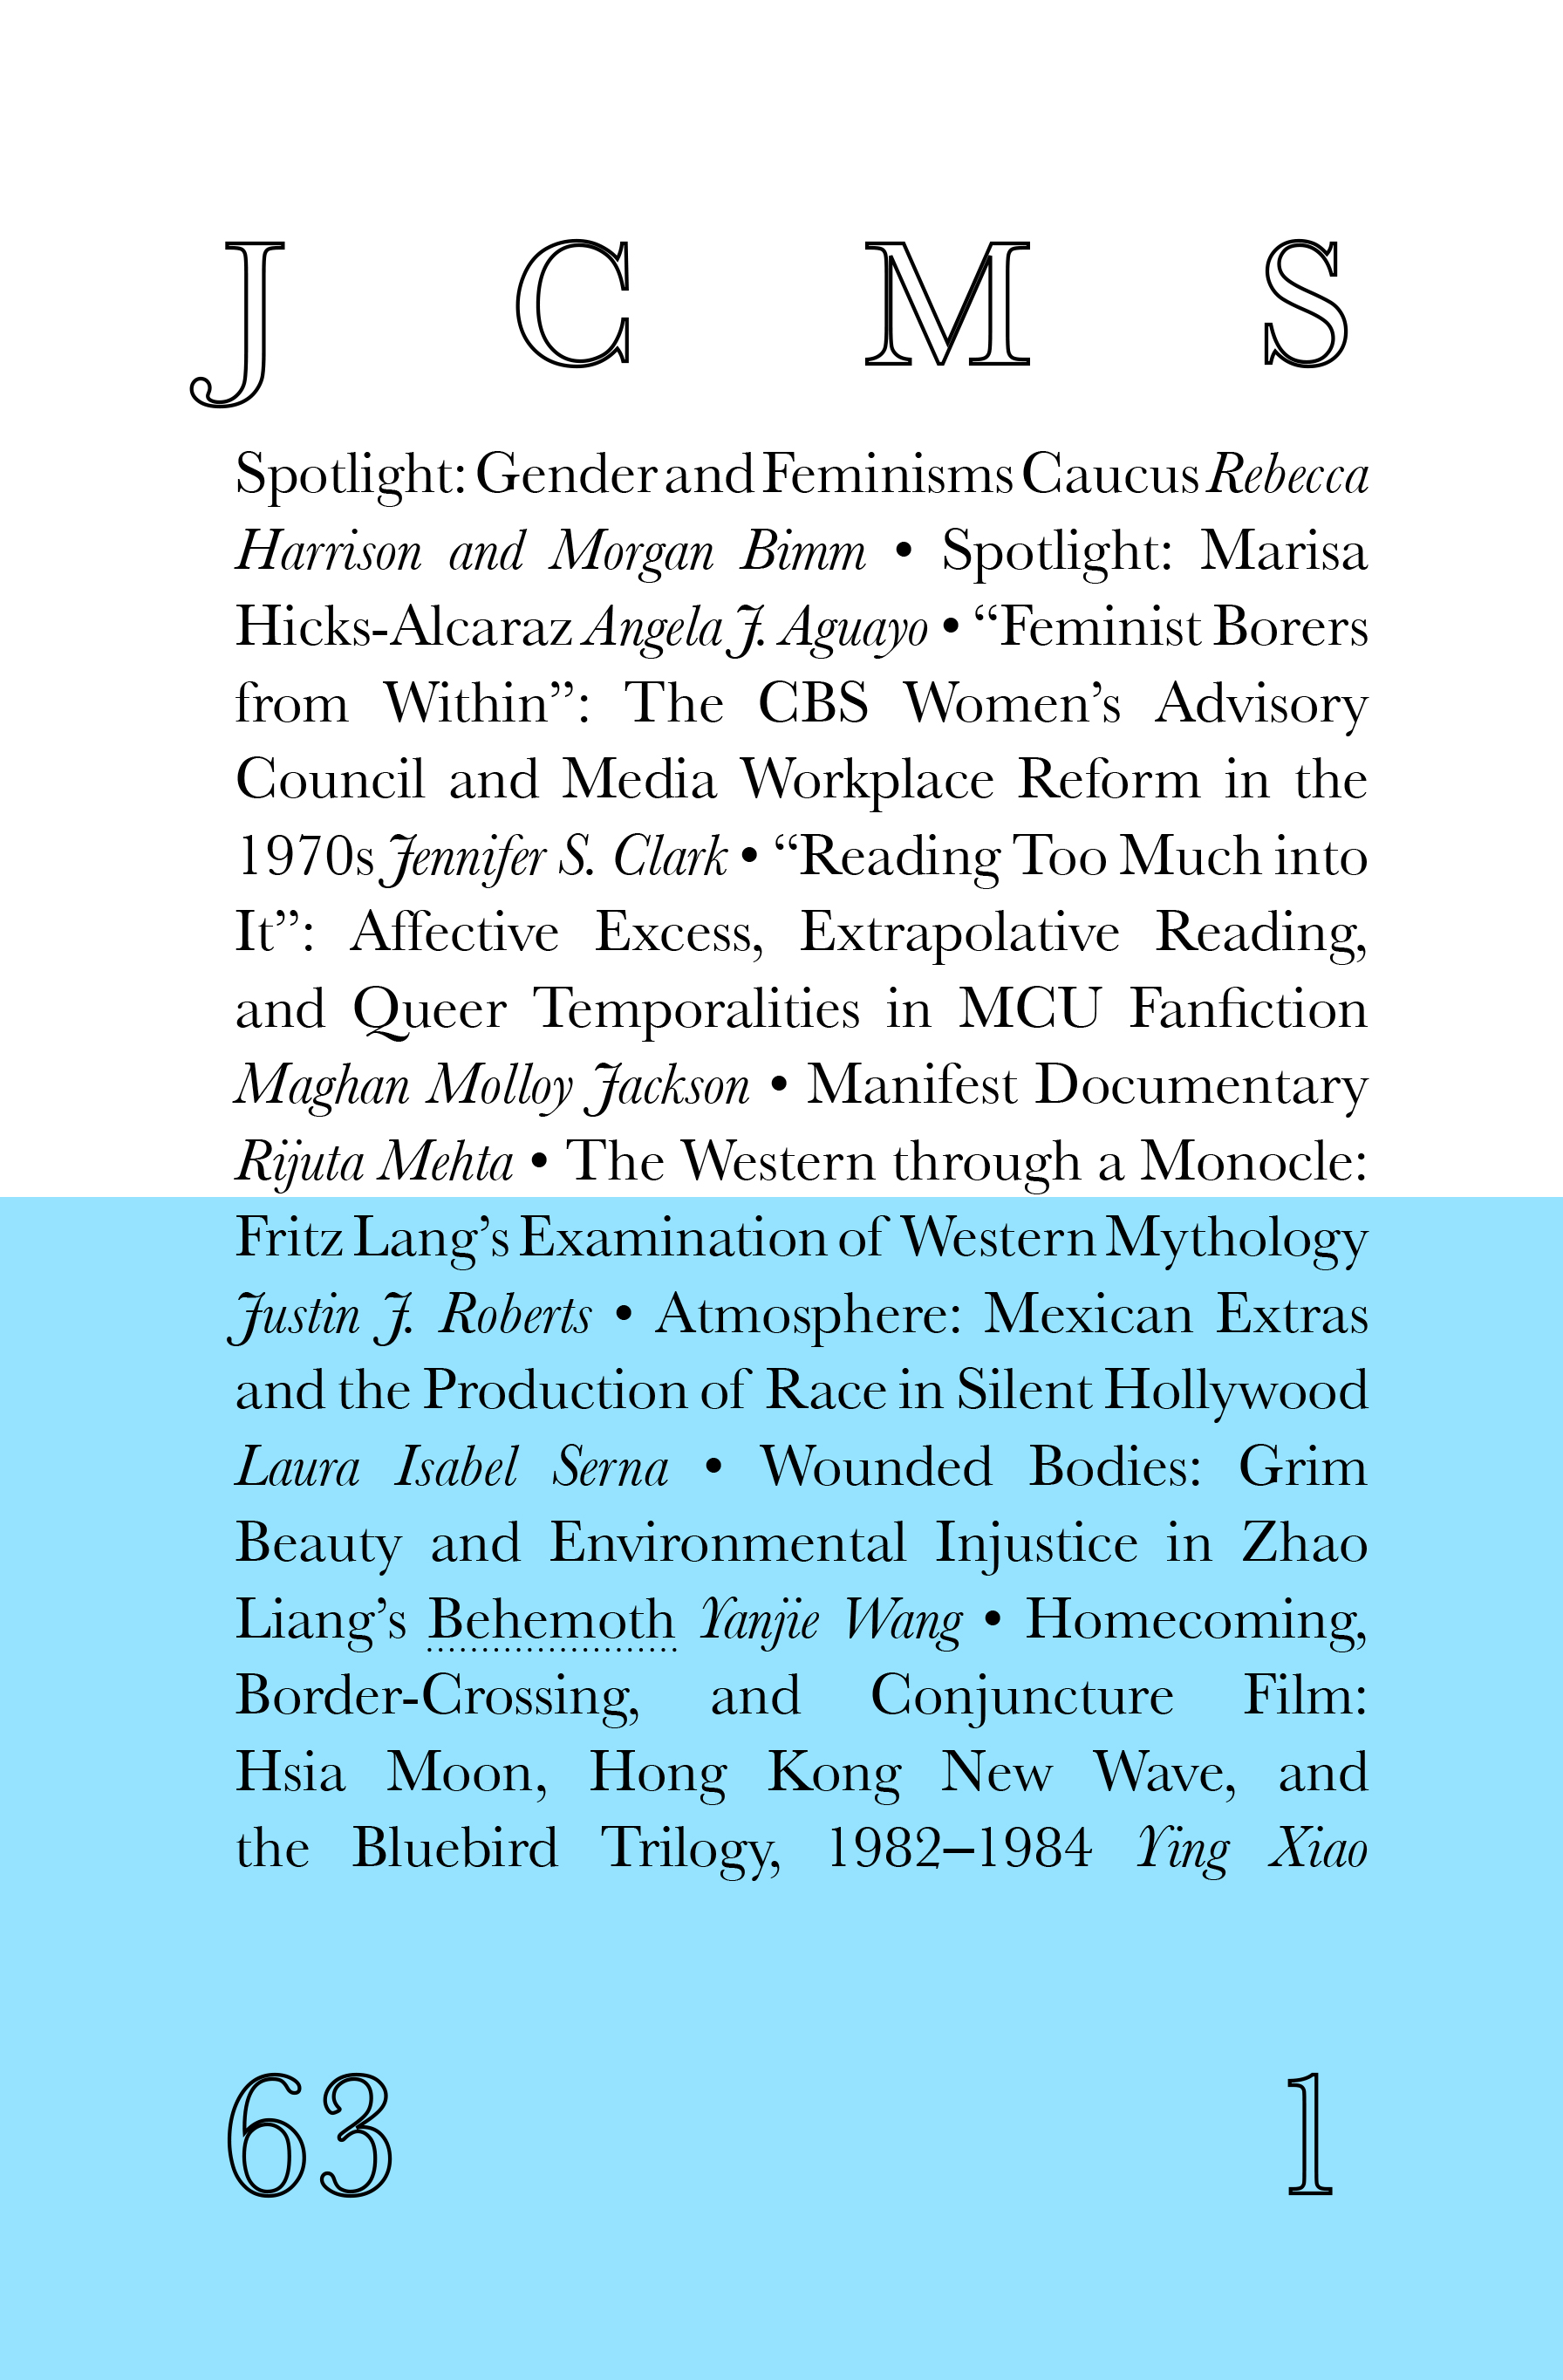 Journal of Cinema and Media Studies, vol. 63, no. 1